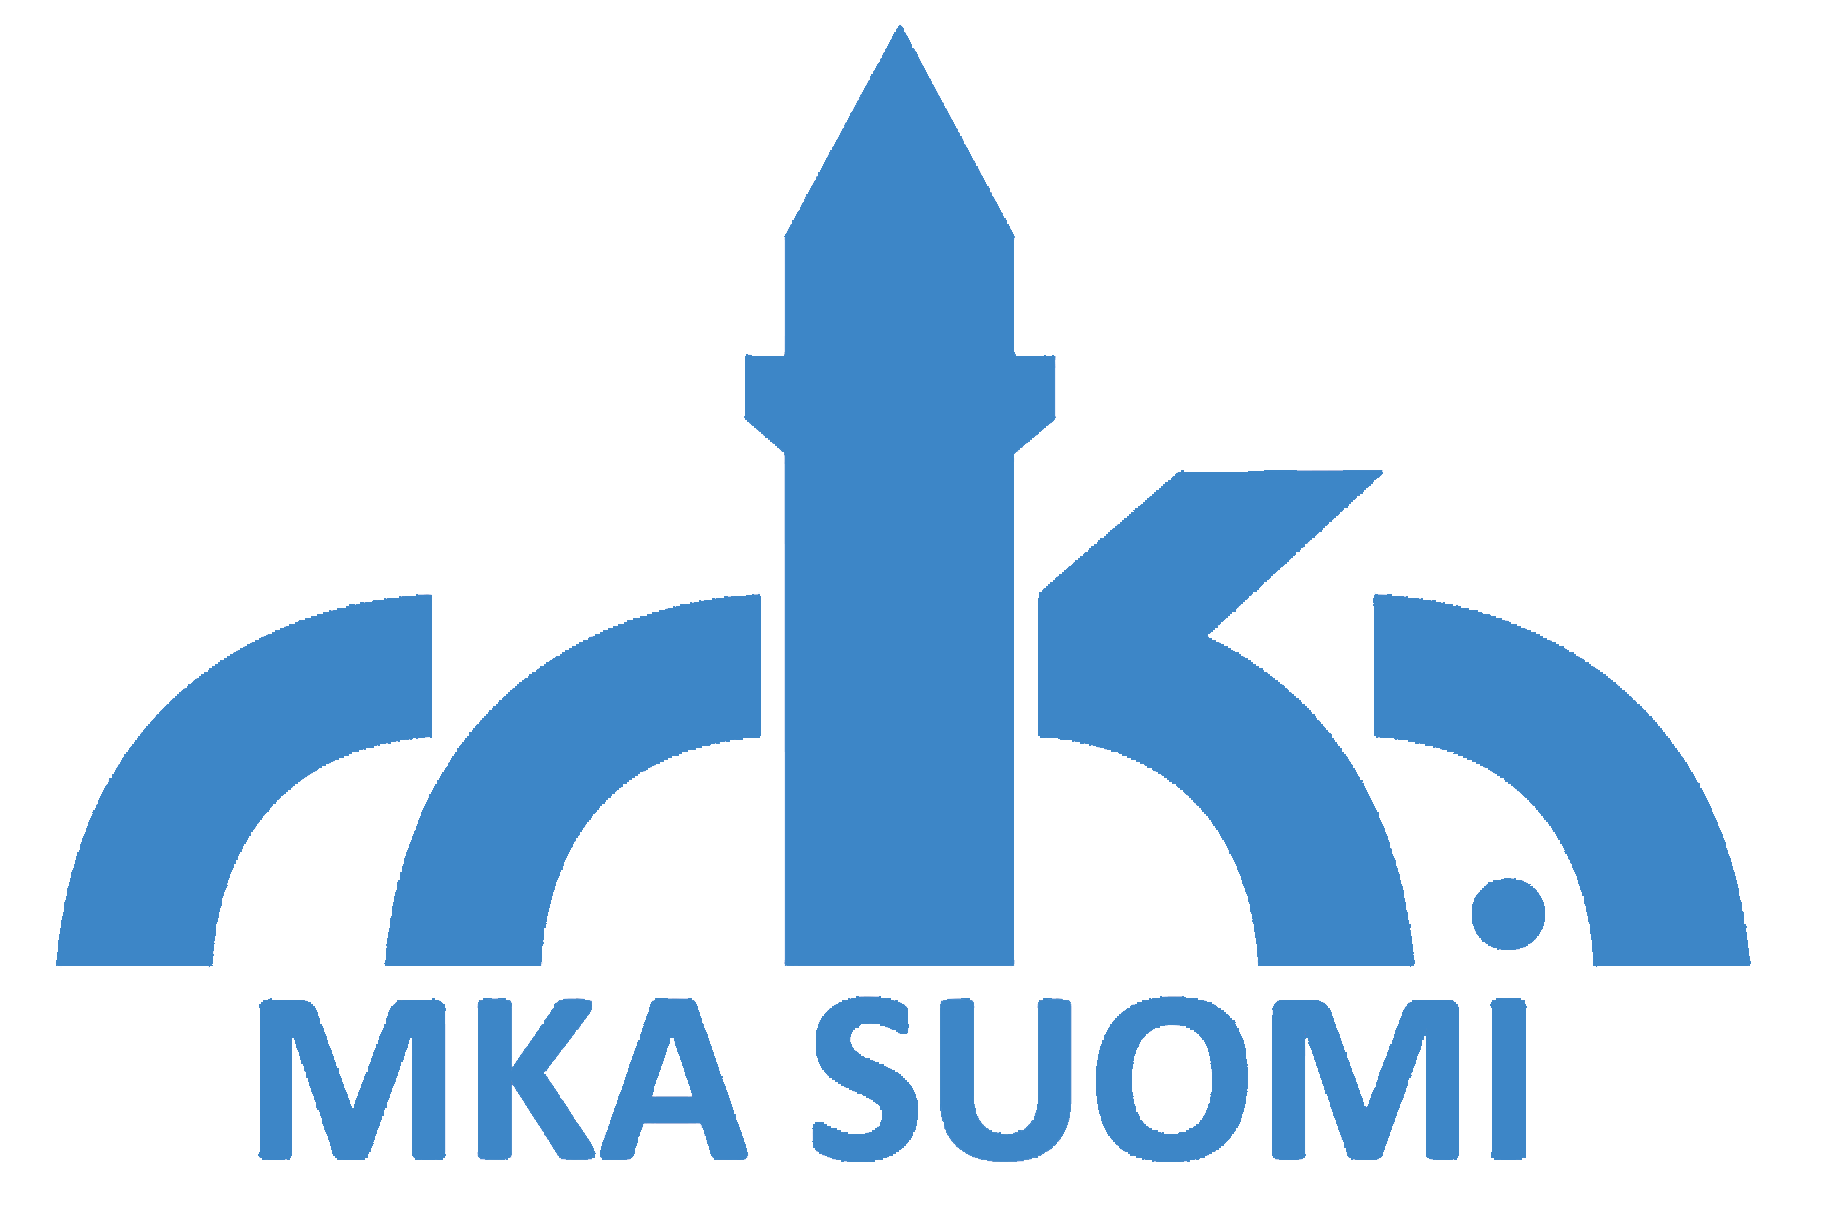 Majlis Khuddamul Ahmadiyya Finland